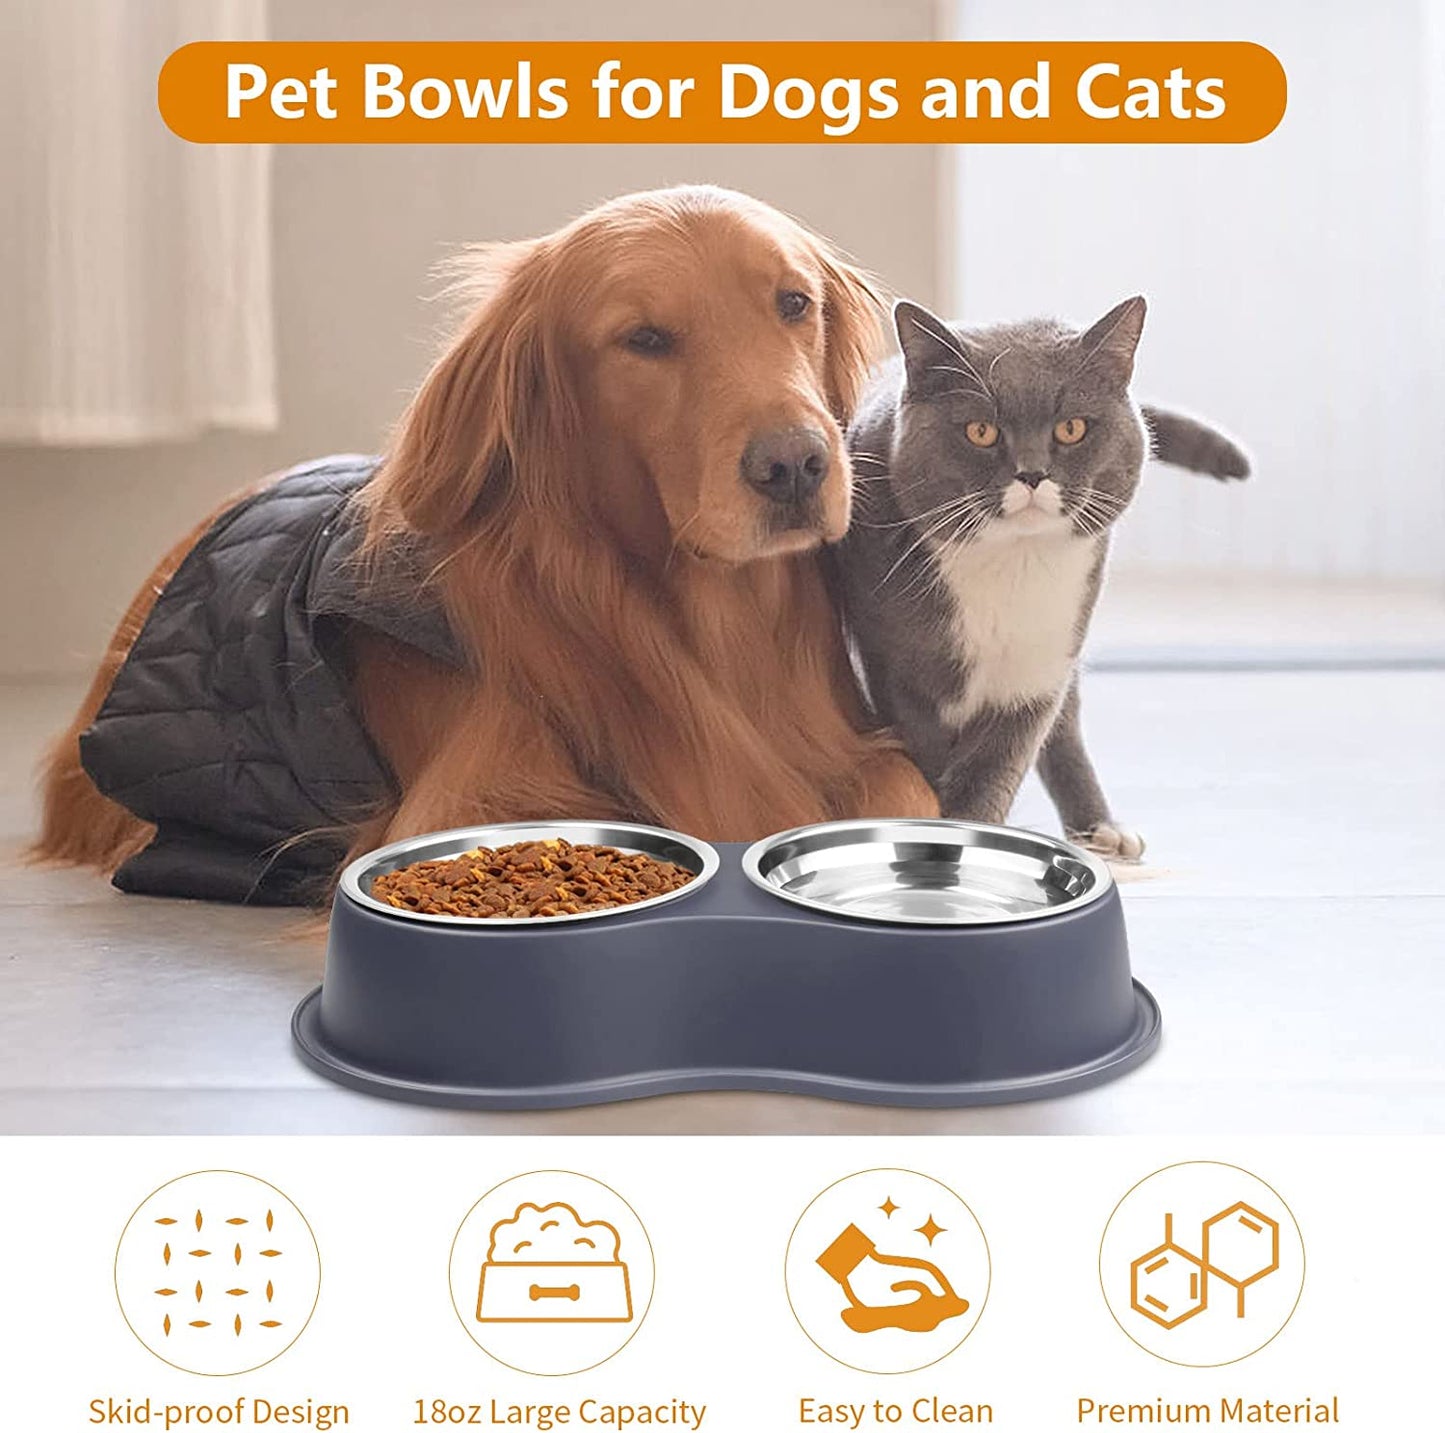 Dog & Cat Bowl